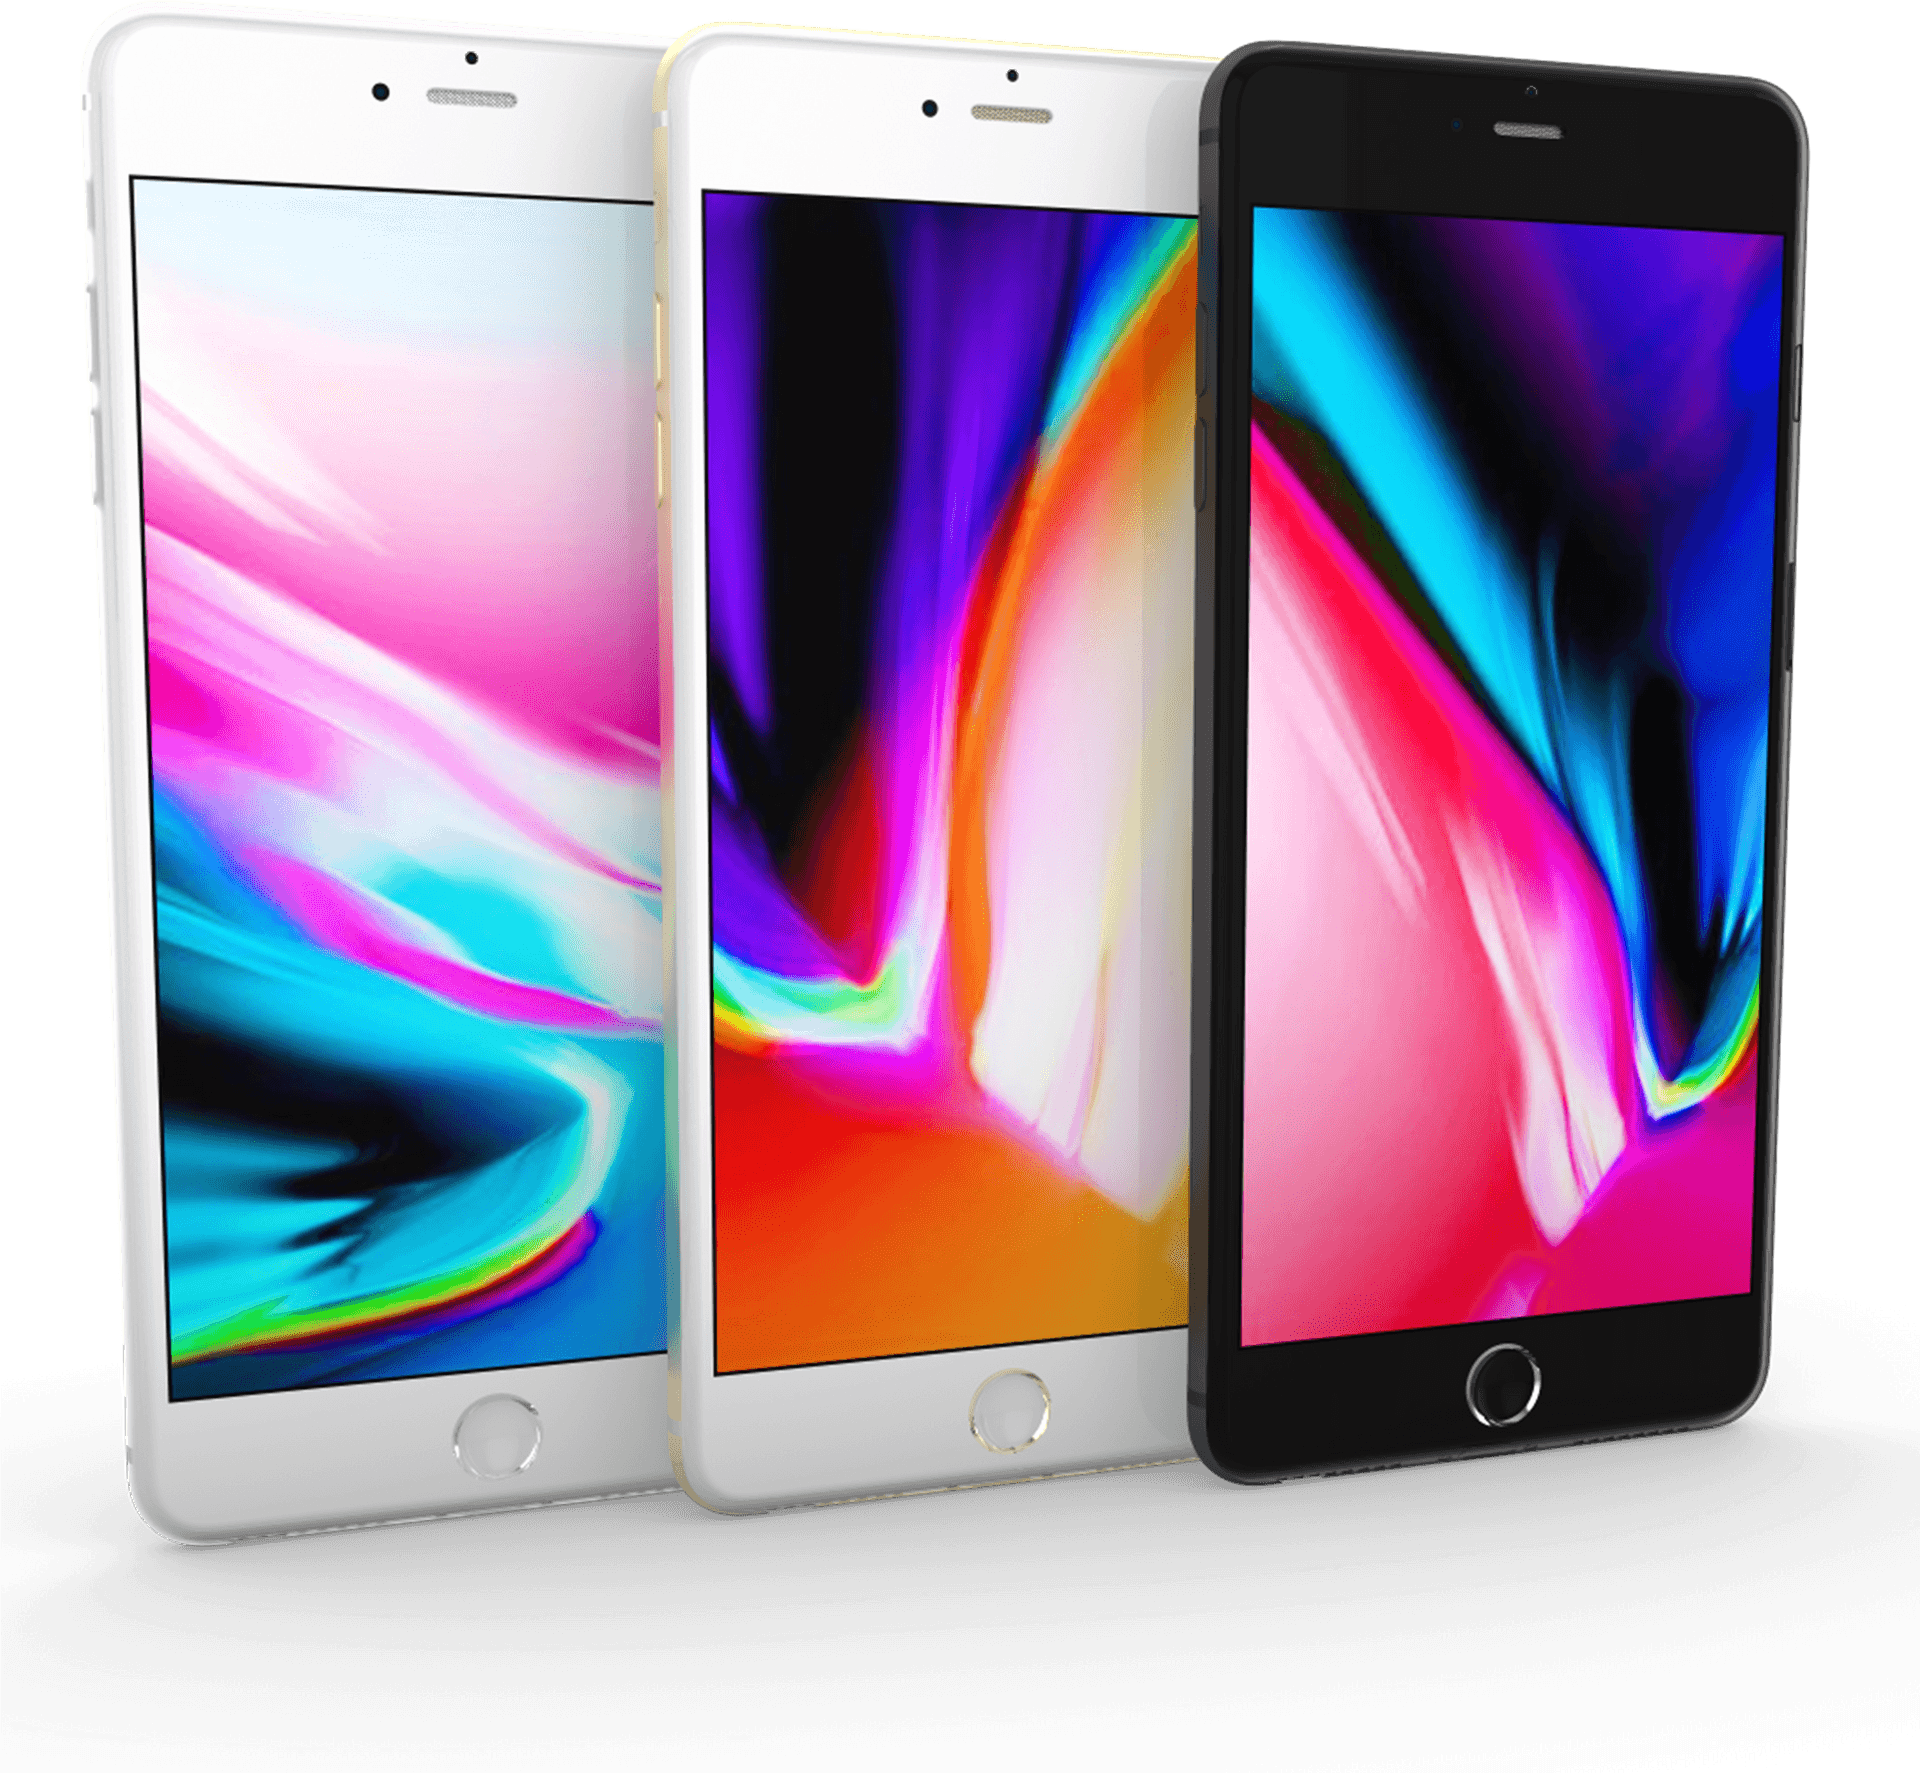 Applei Phones Colorful Display Trio PNG image